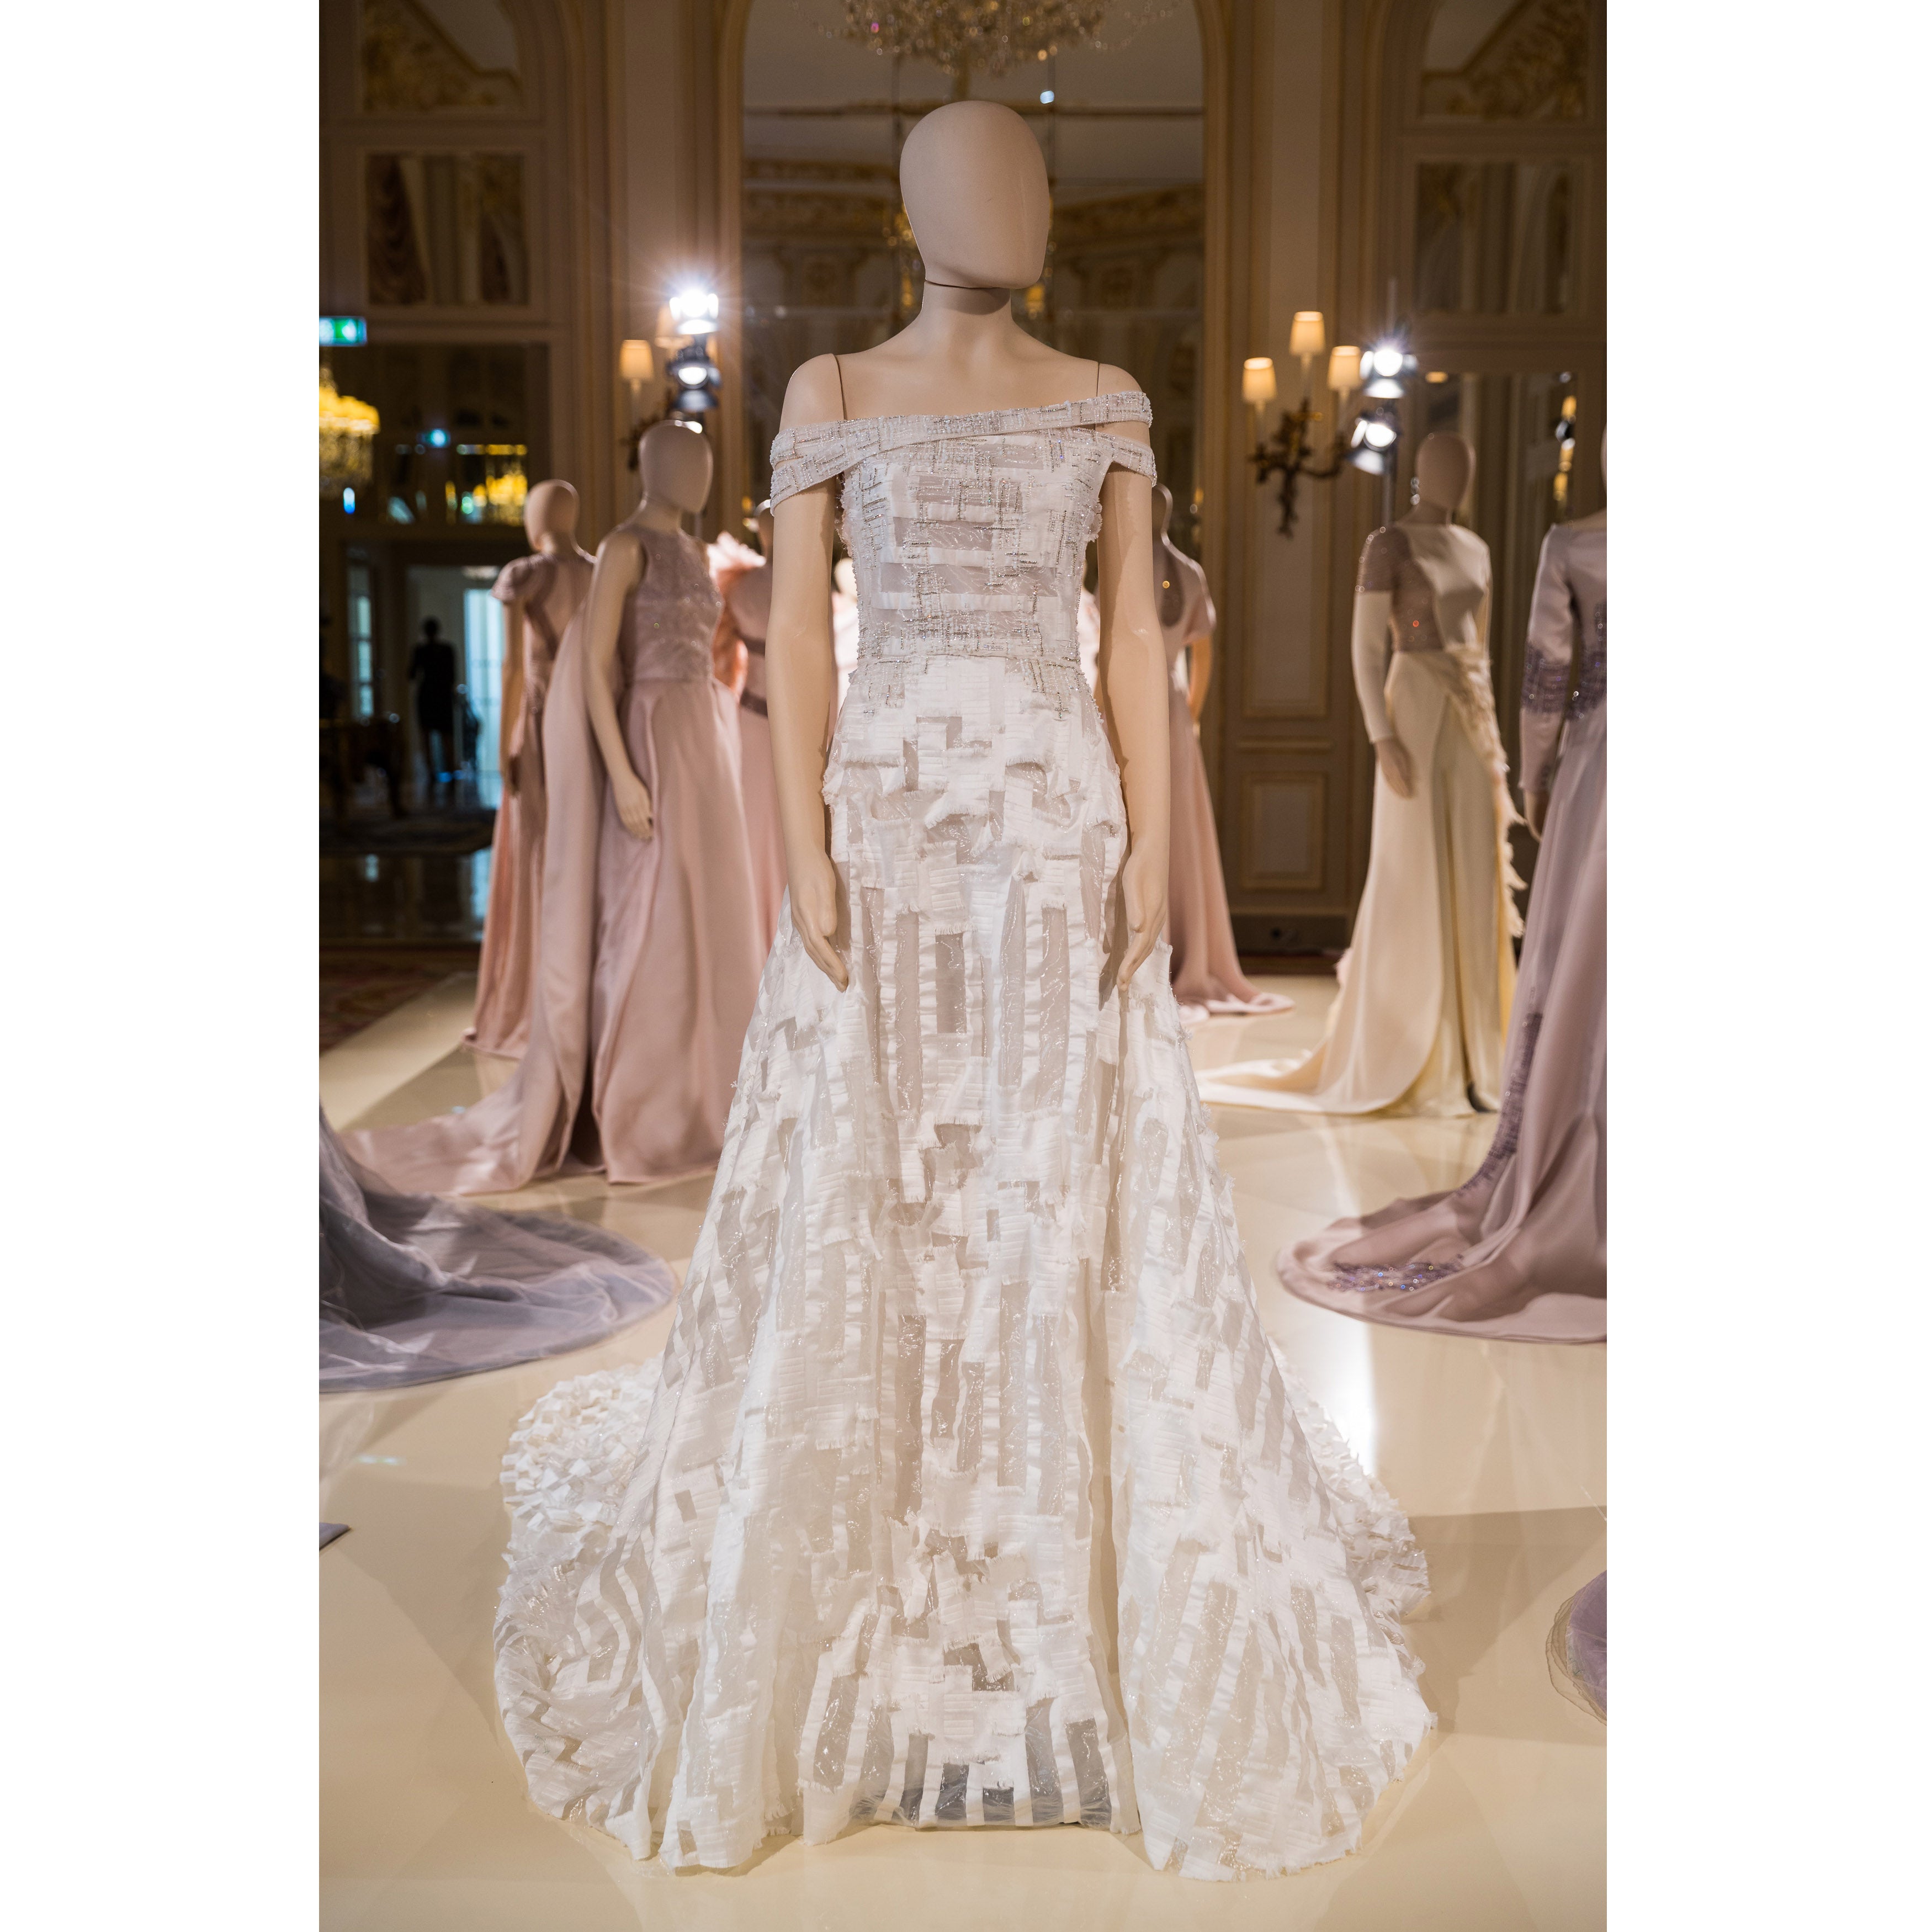 23 Stunning Wedding Dresses Fresh From The Paris Haute Couture Runway
